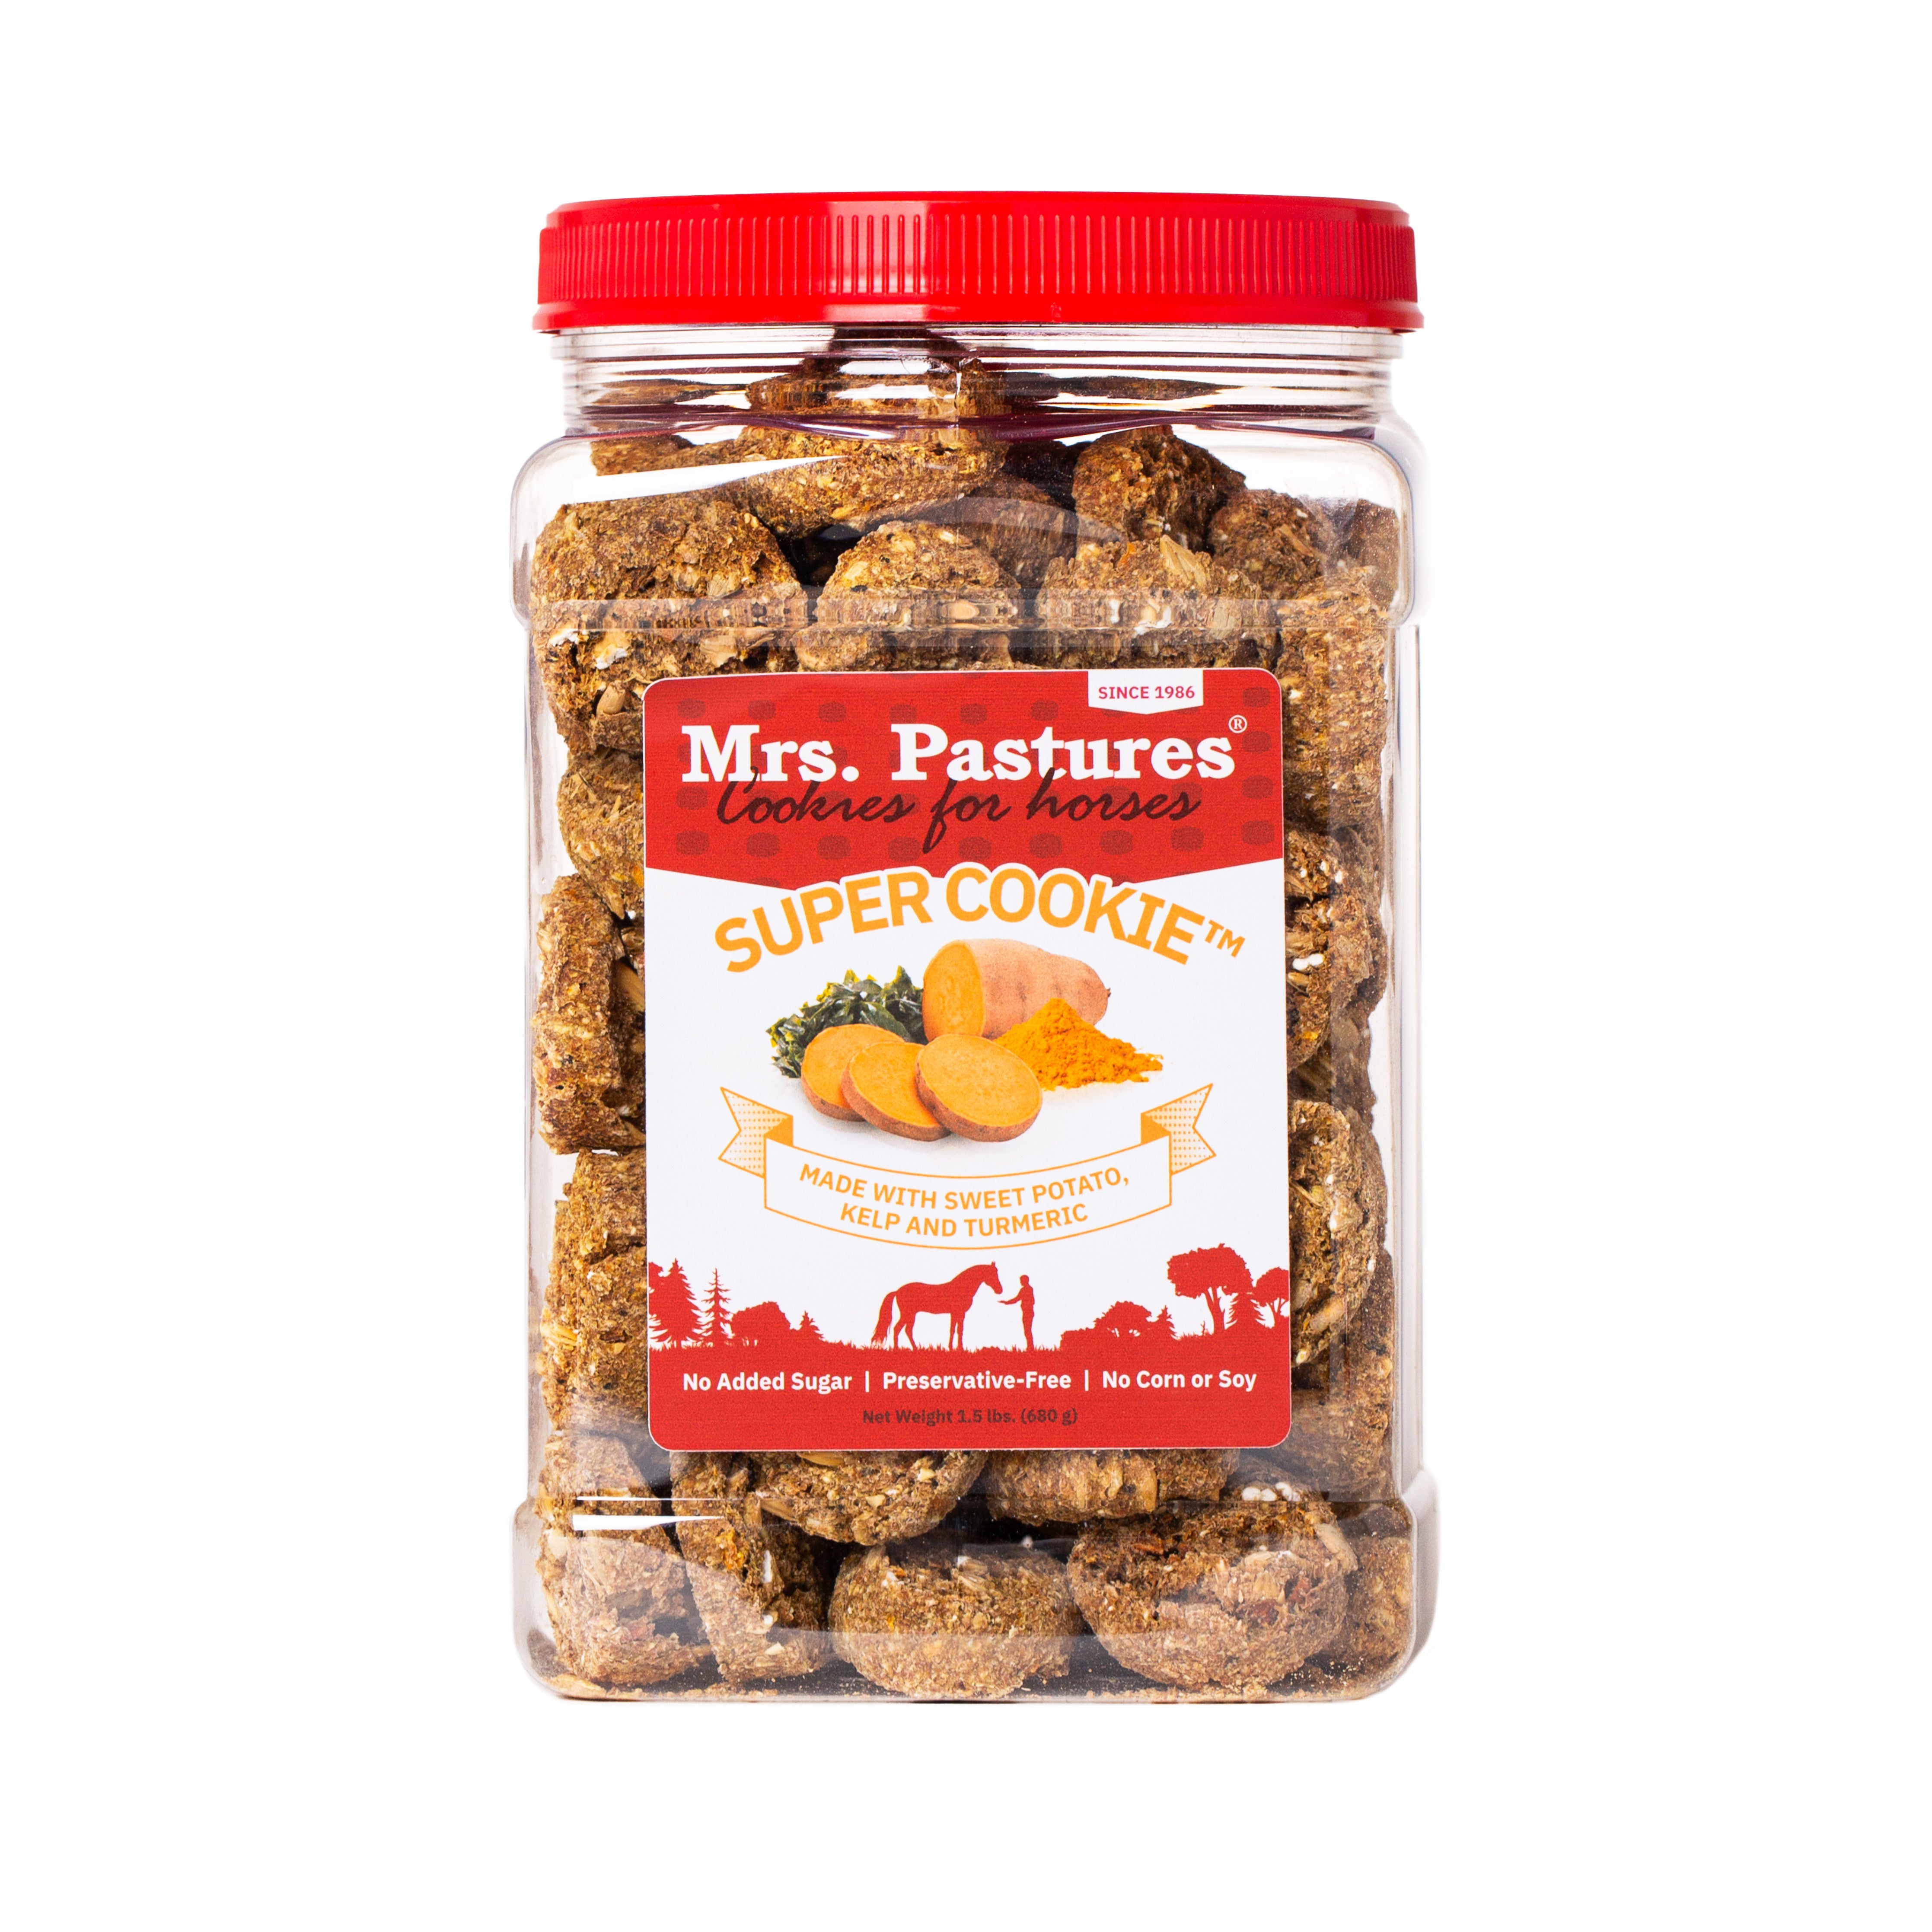 Mrs Pastures Super Cookie 1.5 lb jar